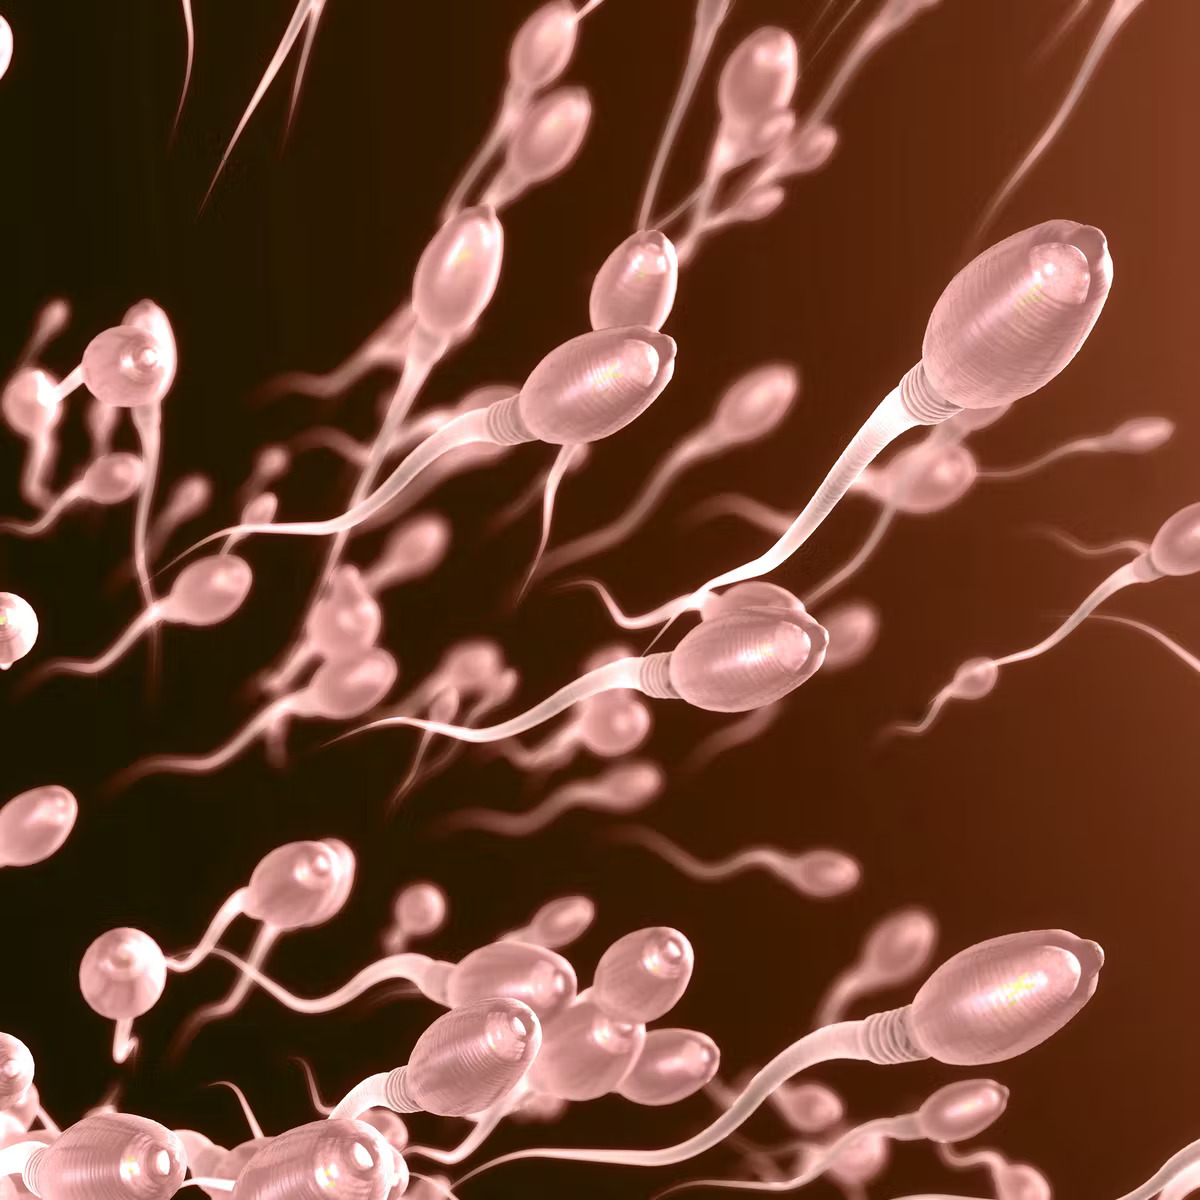 A Depiction Of Sperm